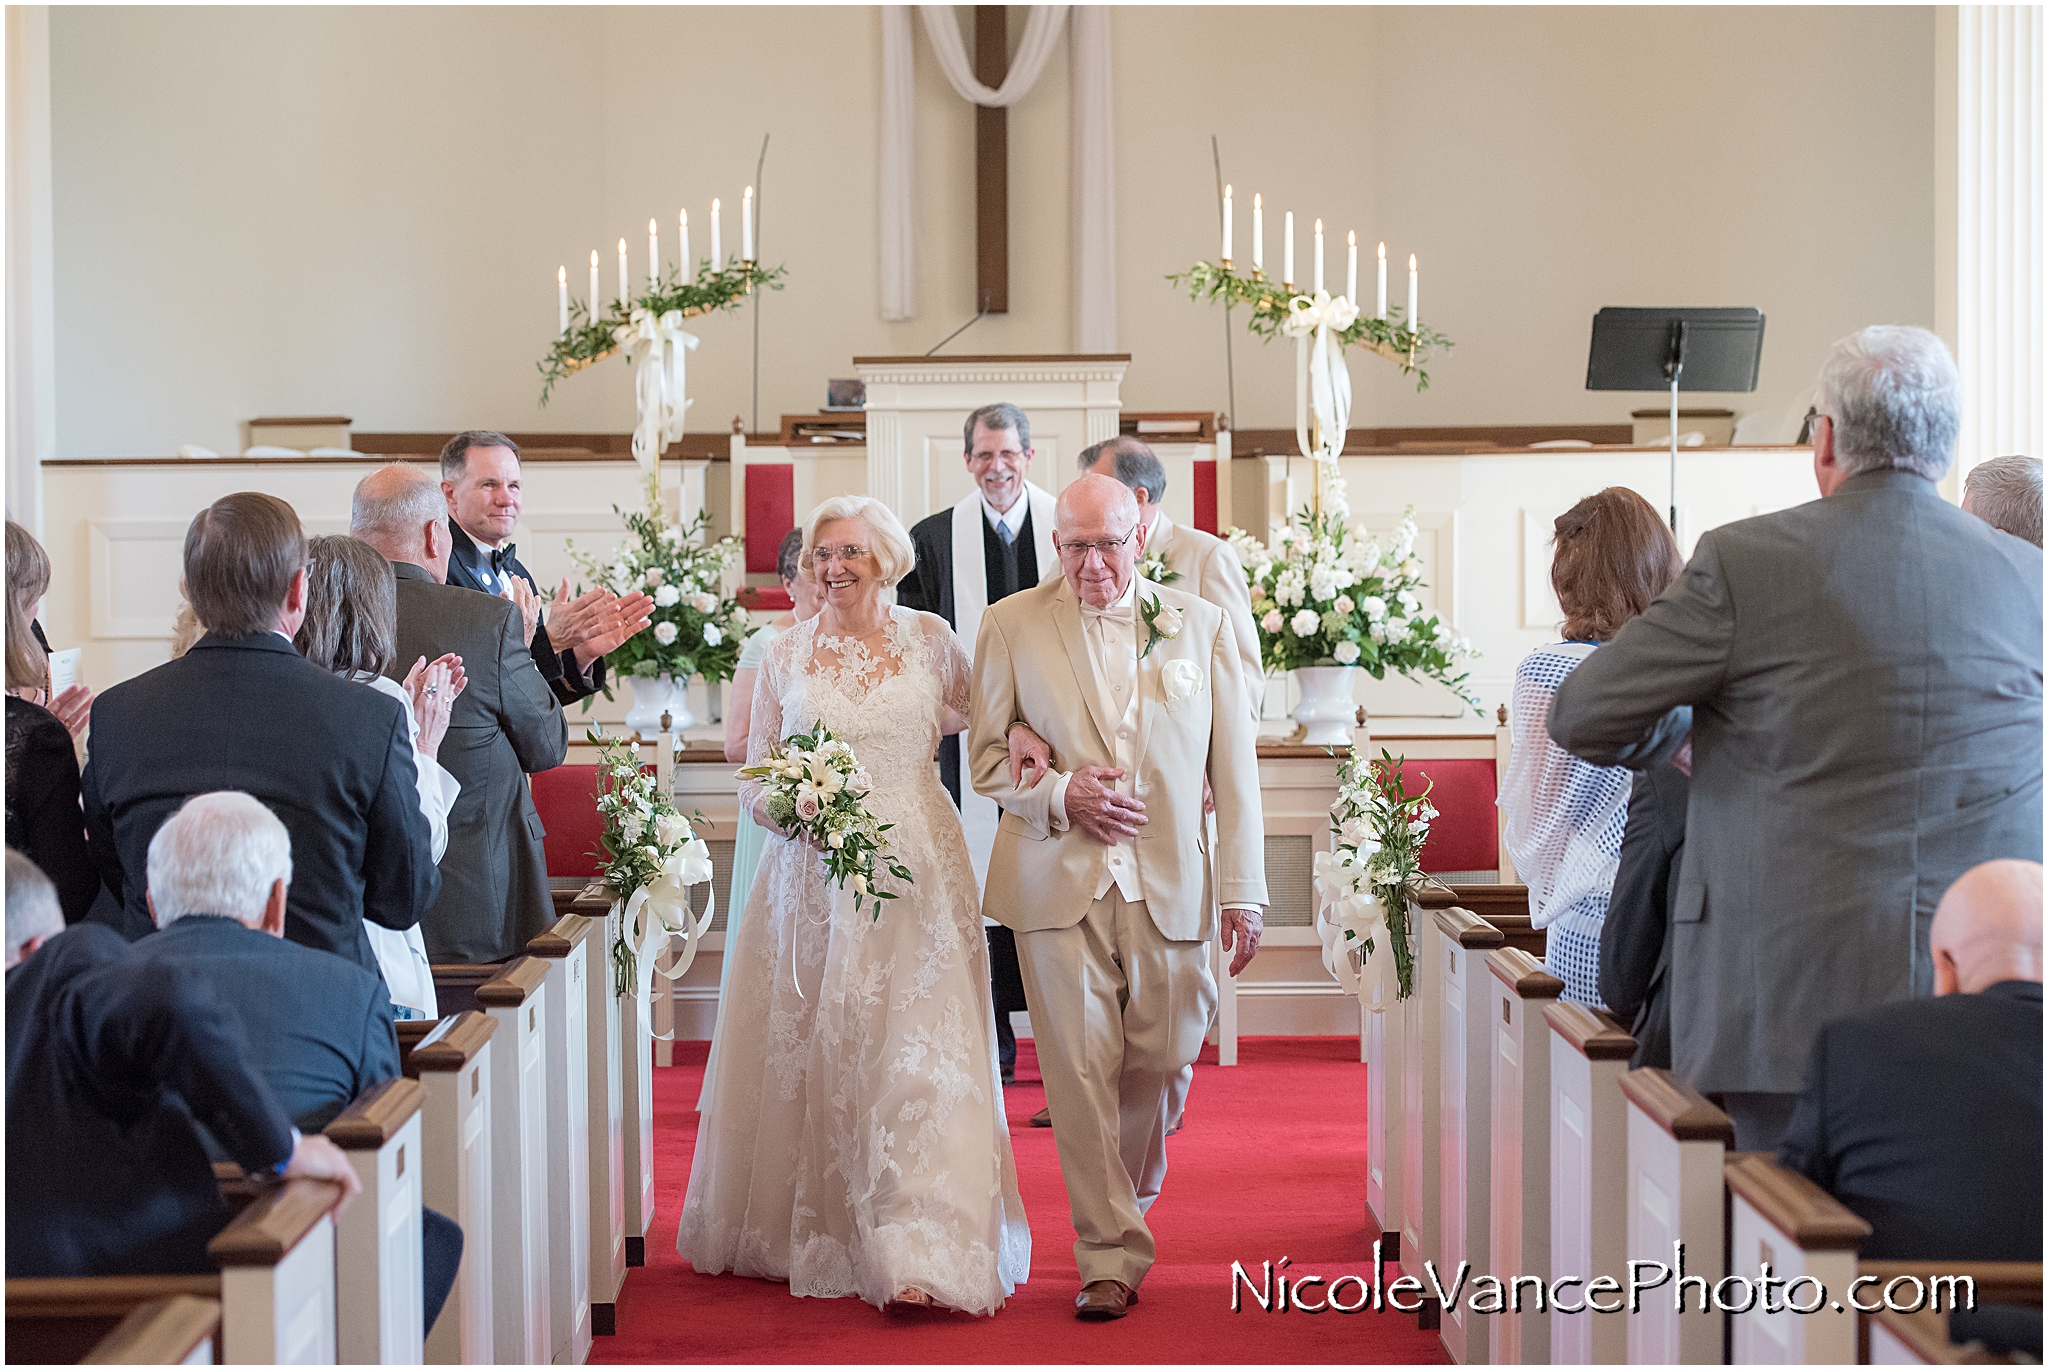 The newlyweds walk down the aisle at Crestwood Presbyterian Church in Richmond VA